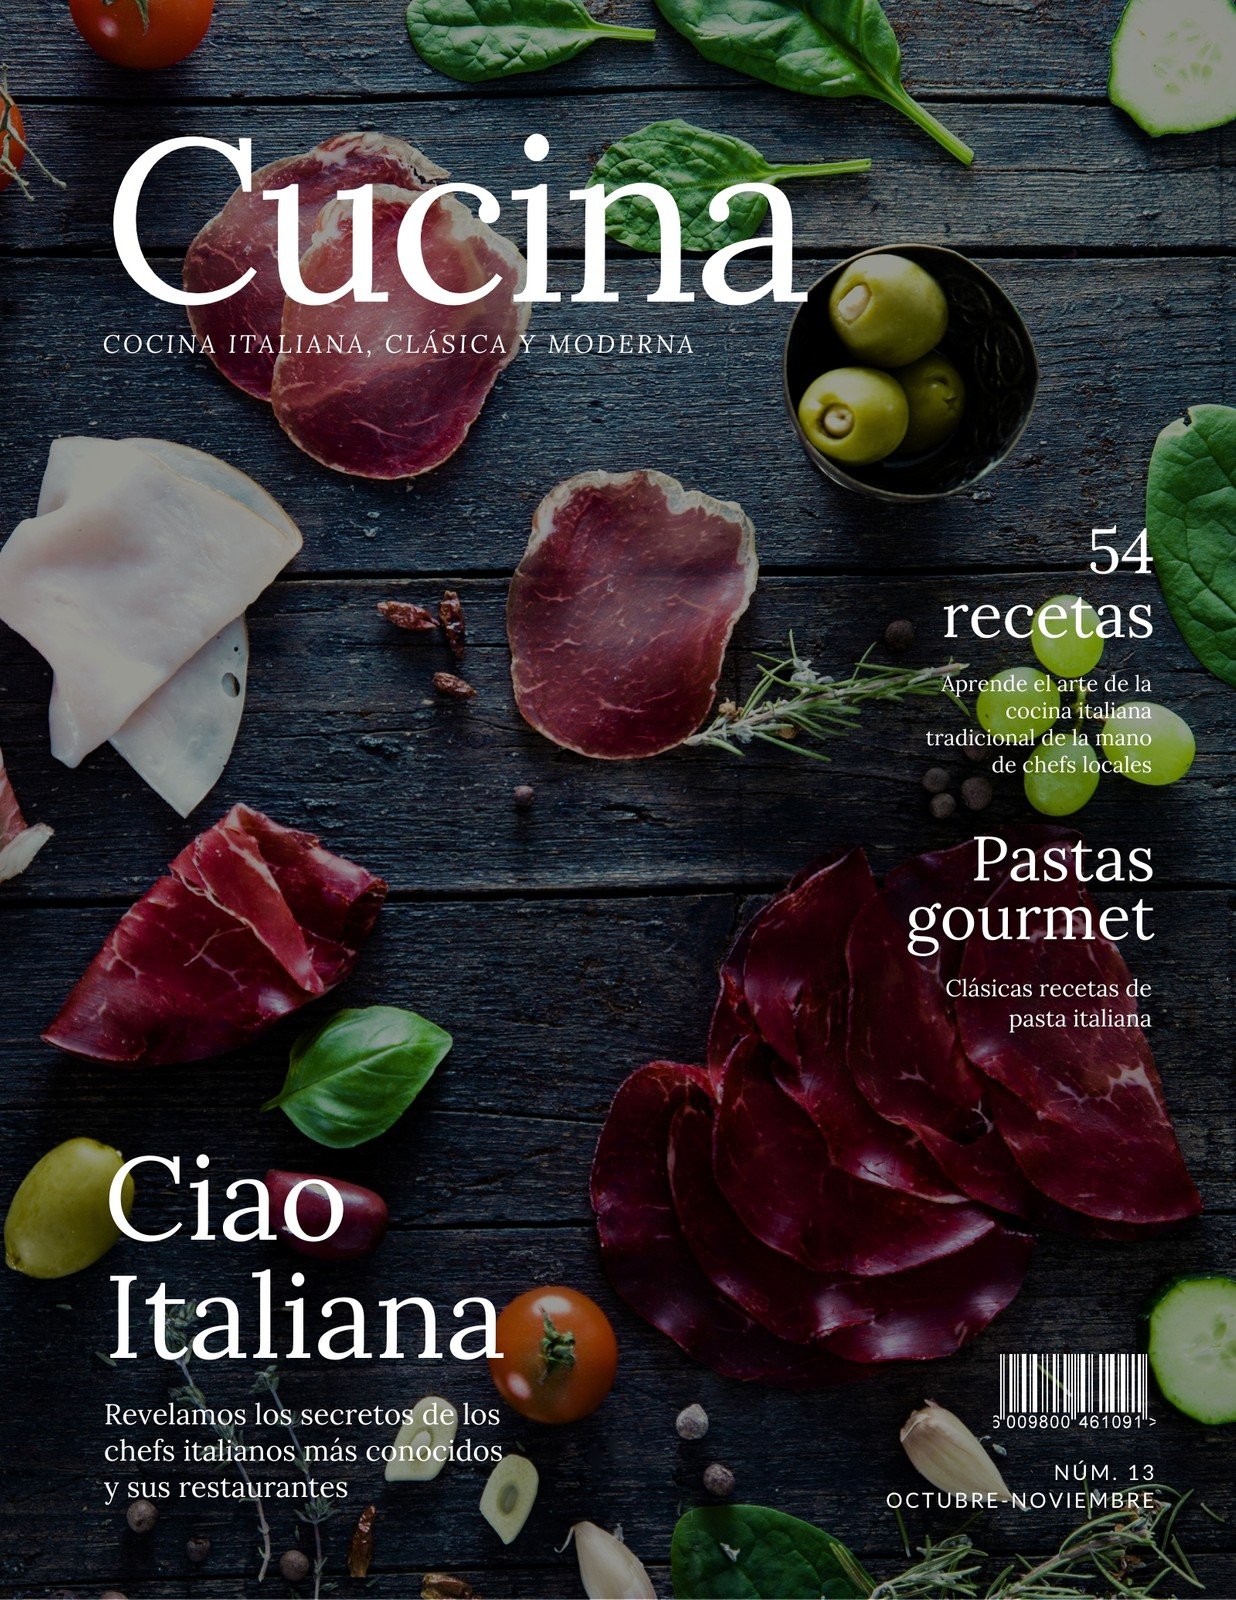 Plantillas para portadas de revistas de comida | Canva